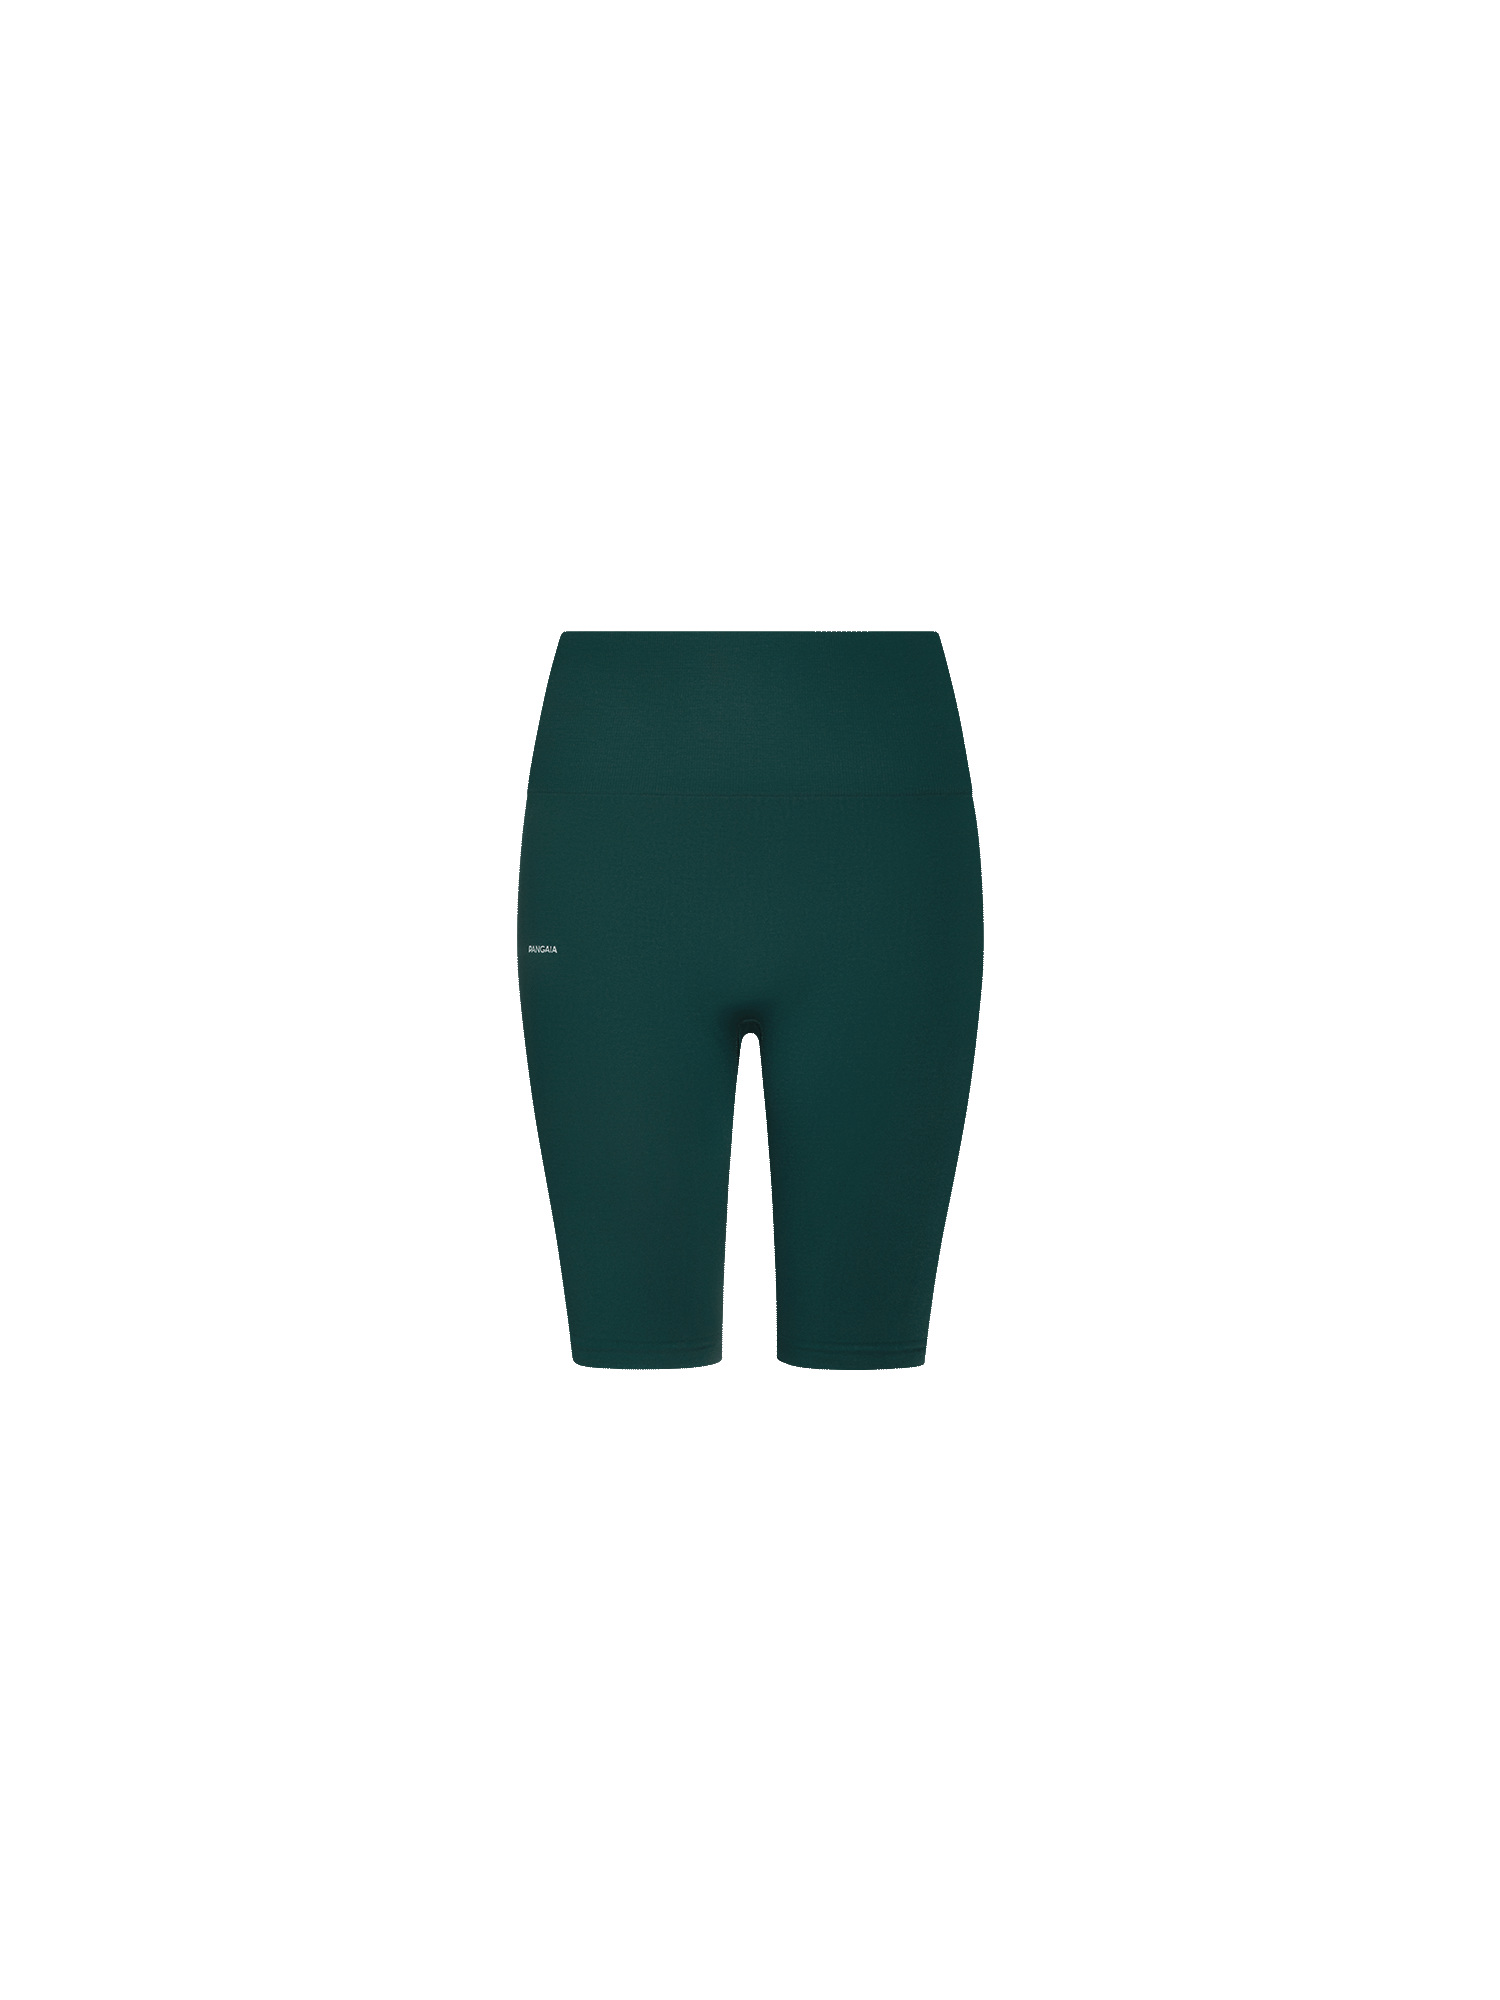 Activewear-3-0-Shorts-Foliage-Green-packshot-3